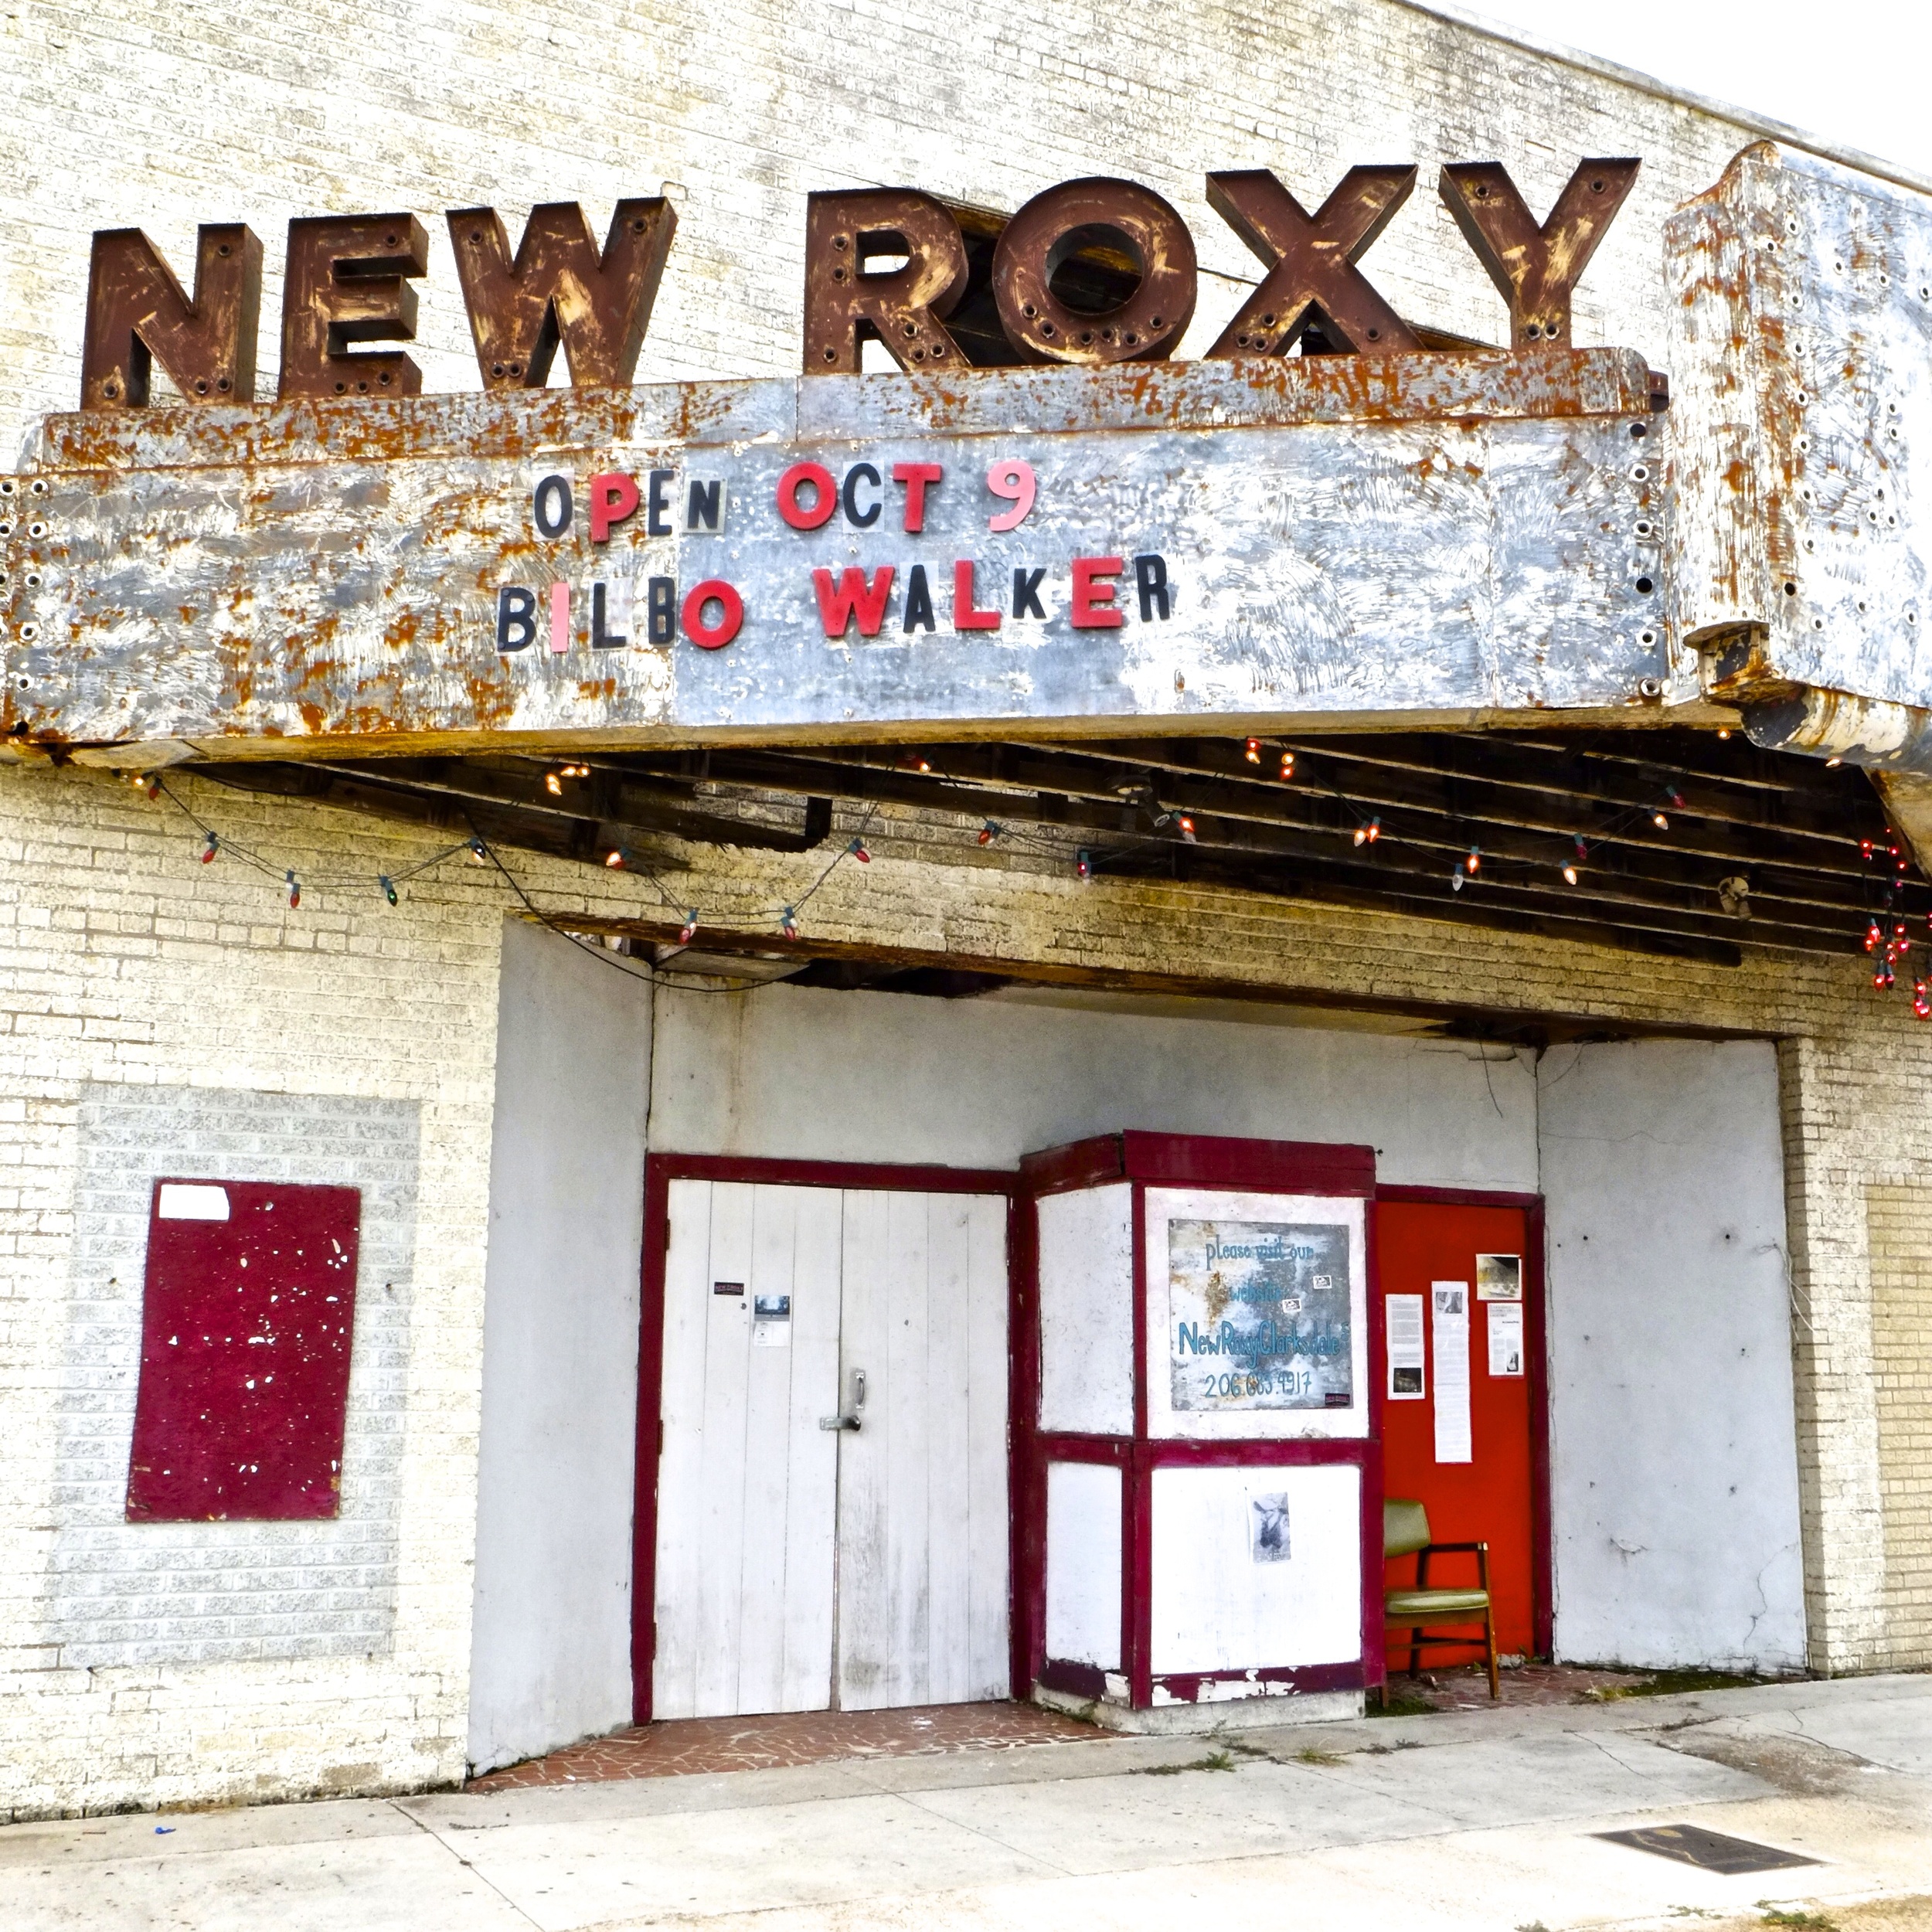 "New" Roxy theater